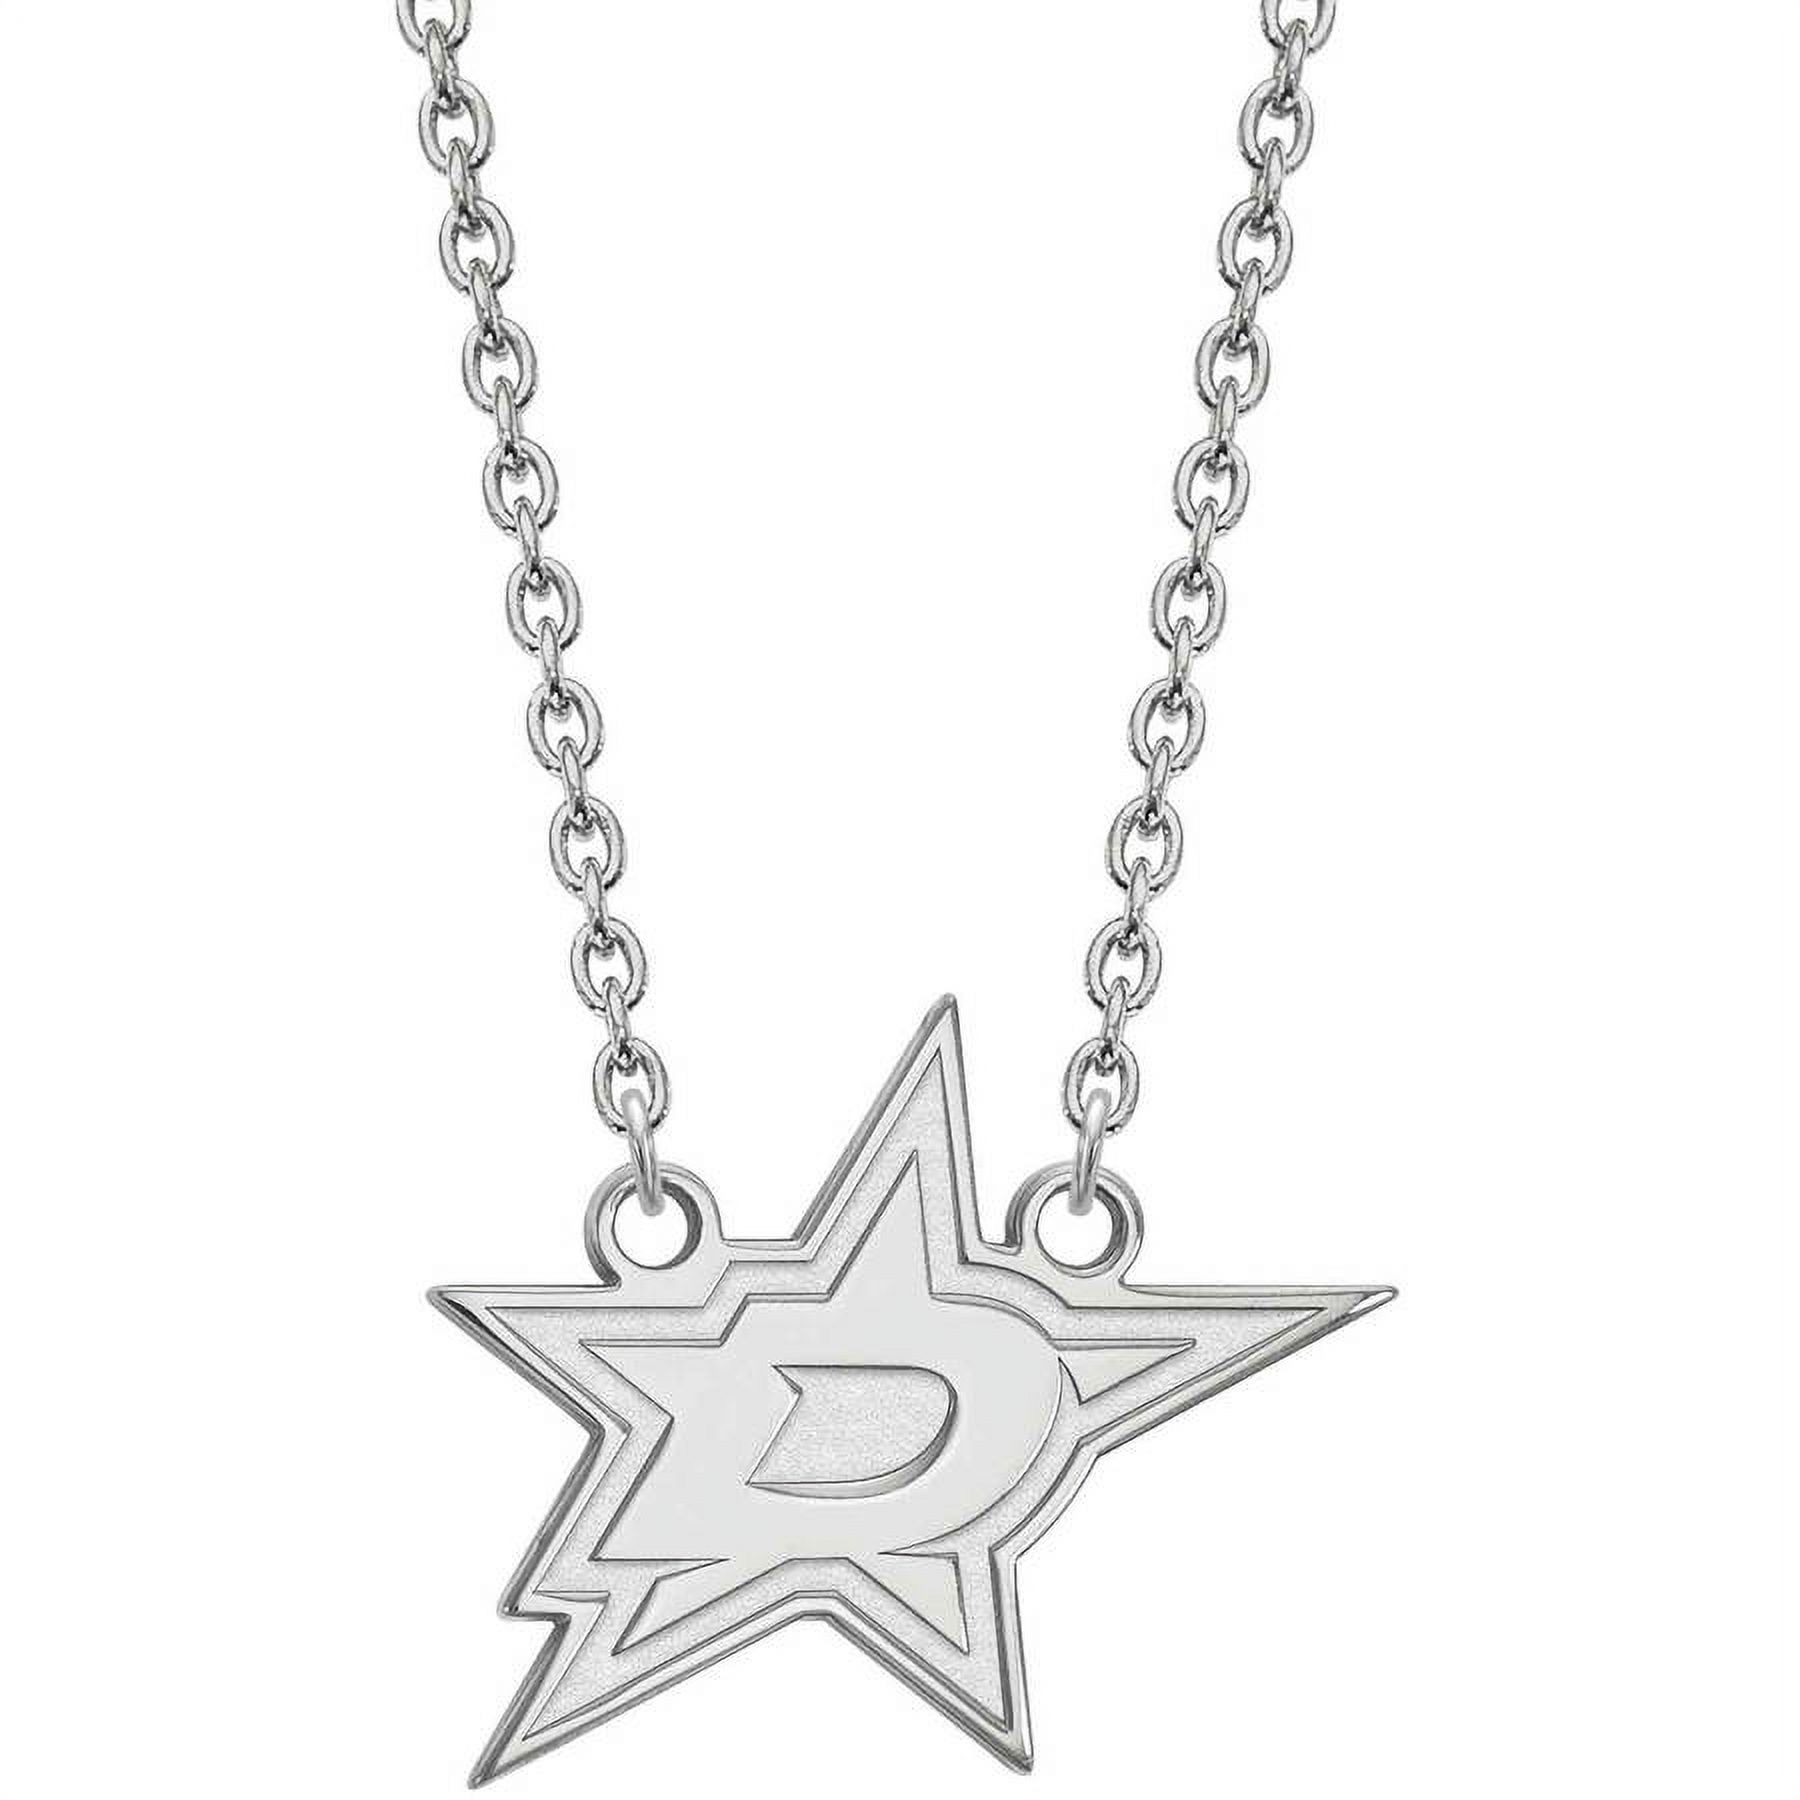 LogoArt 10 Karat White Gold NHL Dallas Stars Large Pendant with Necklace - image 1 of 5